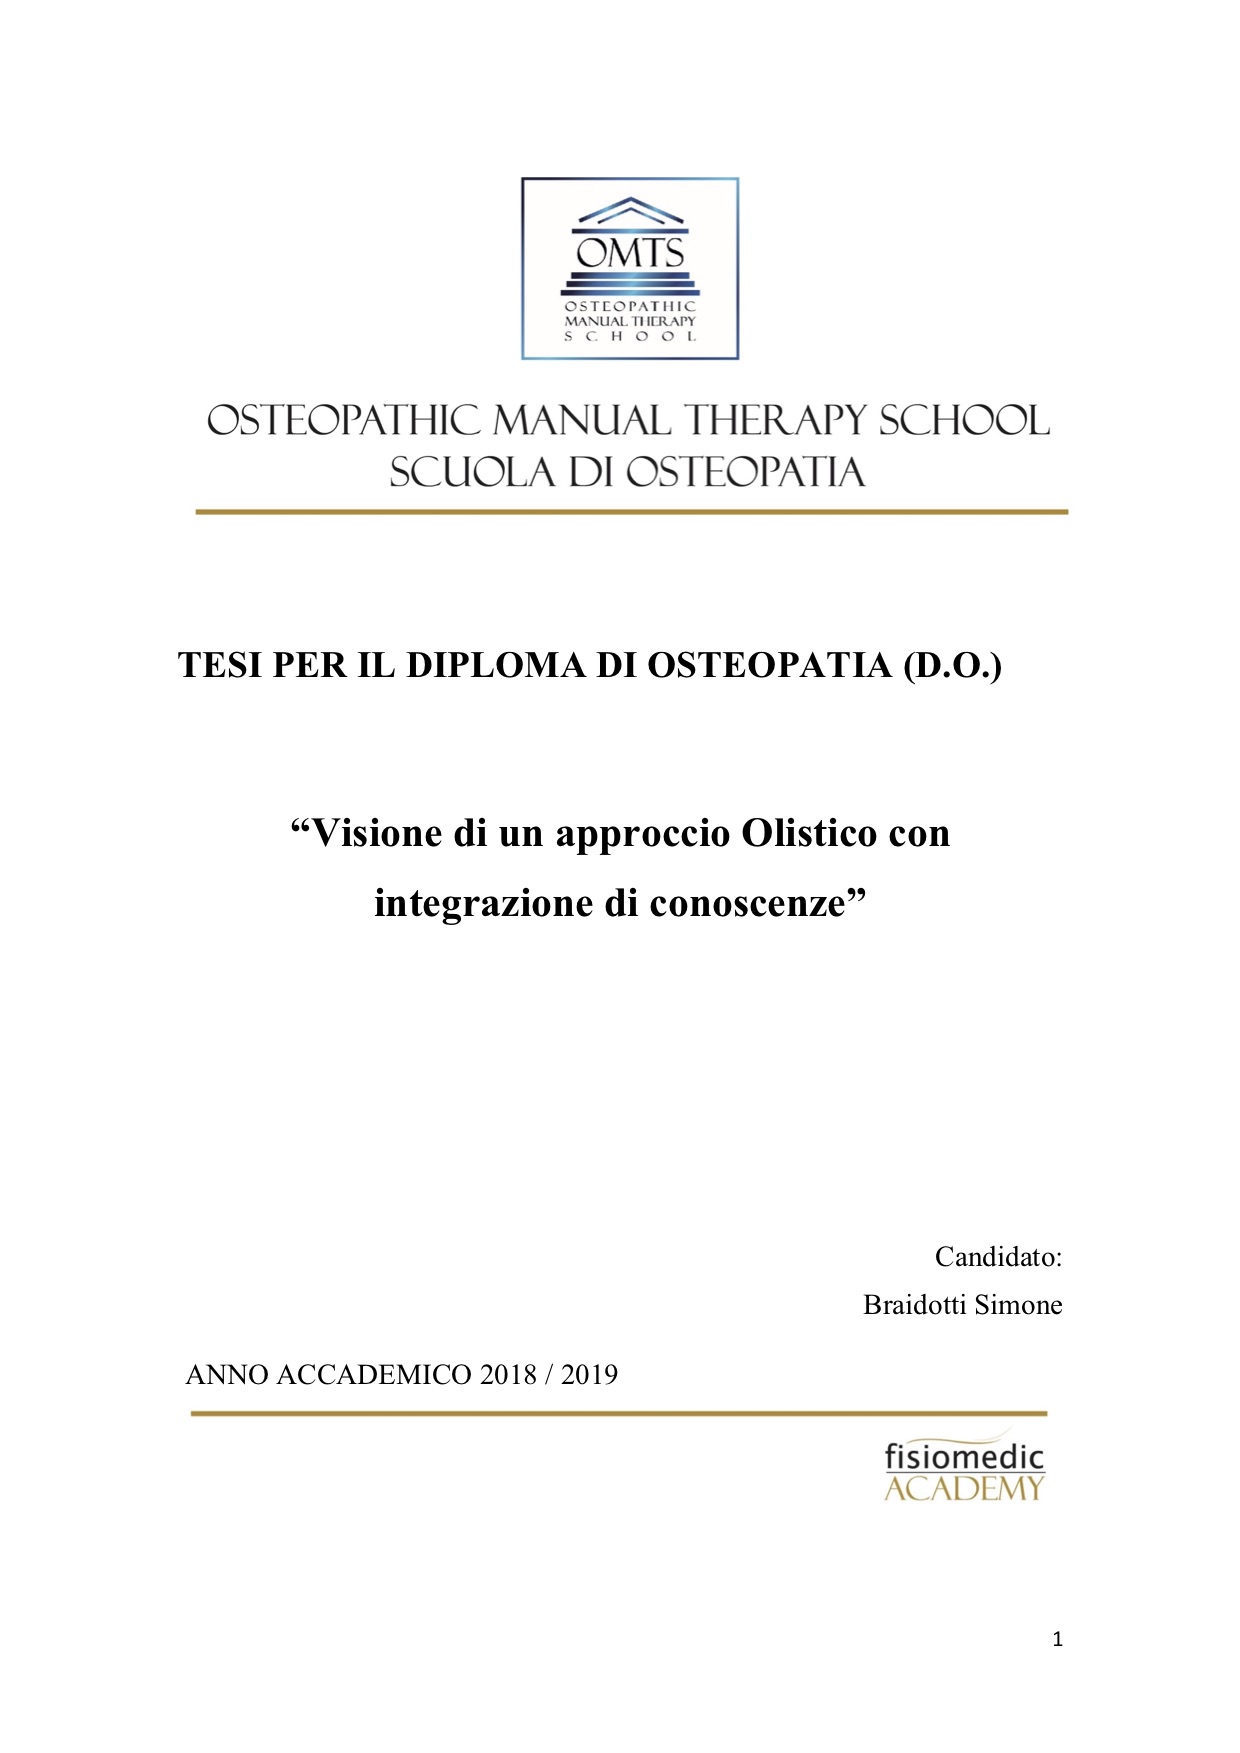 Simone Braidotti Tesi Diploma Osteopatia 2019